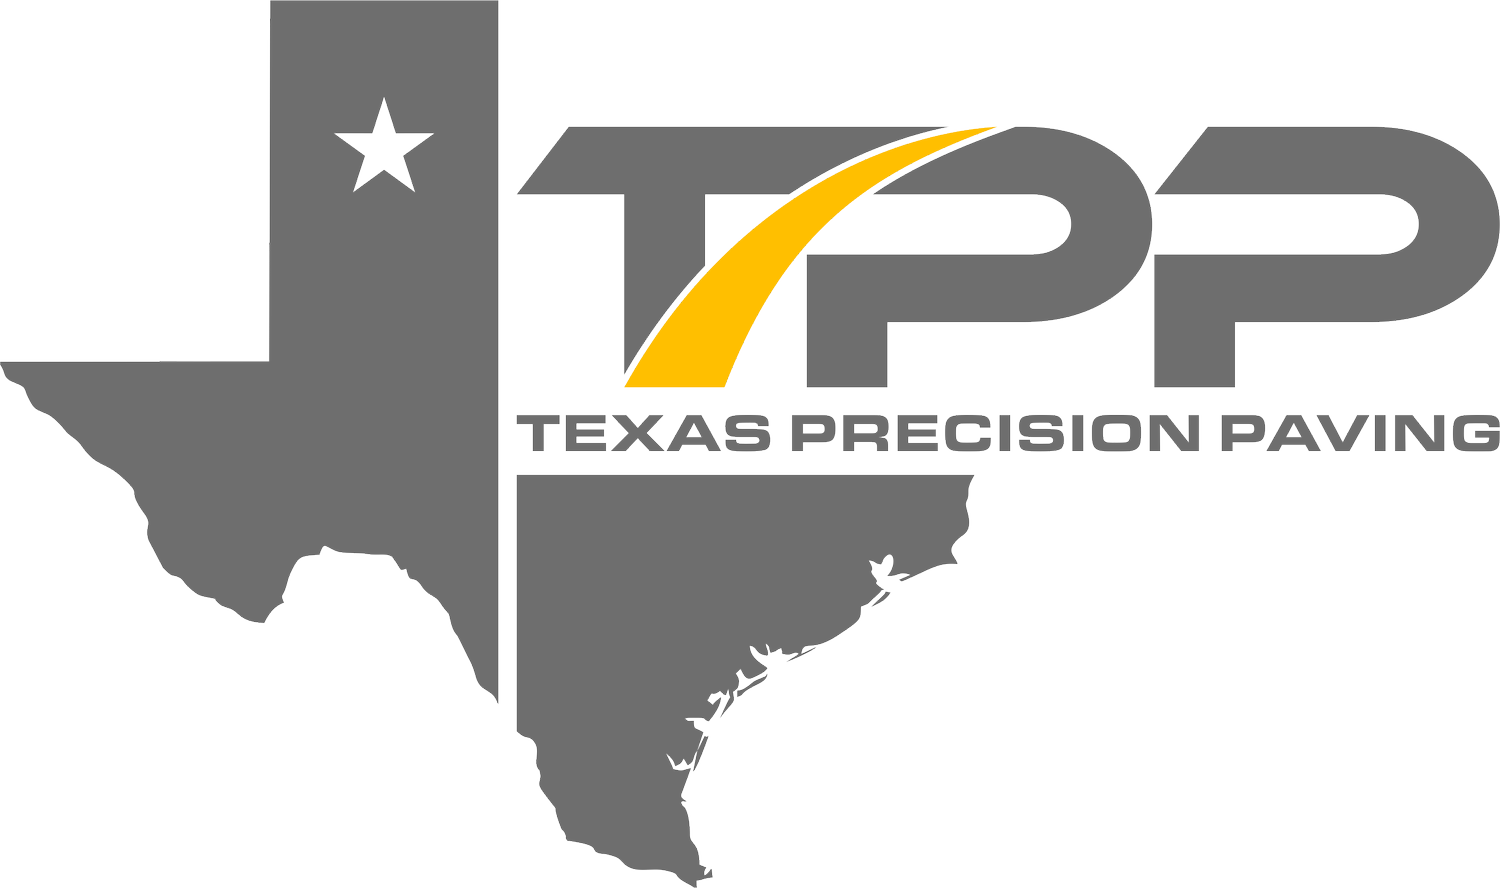 Texas Precision Paving